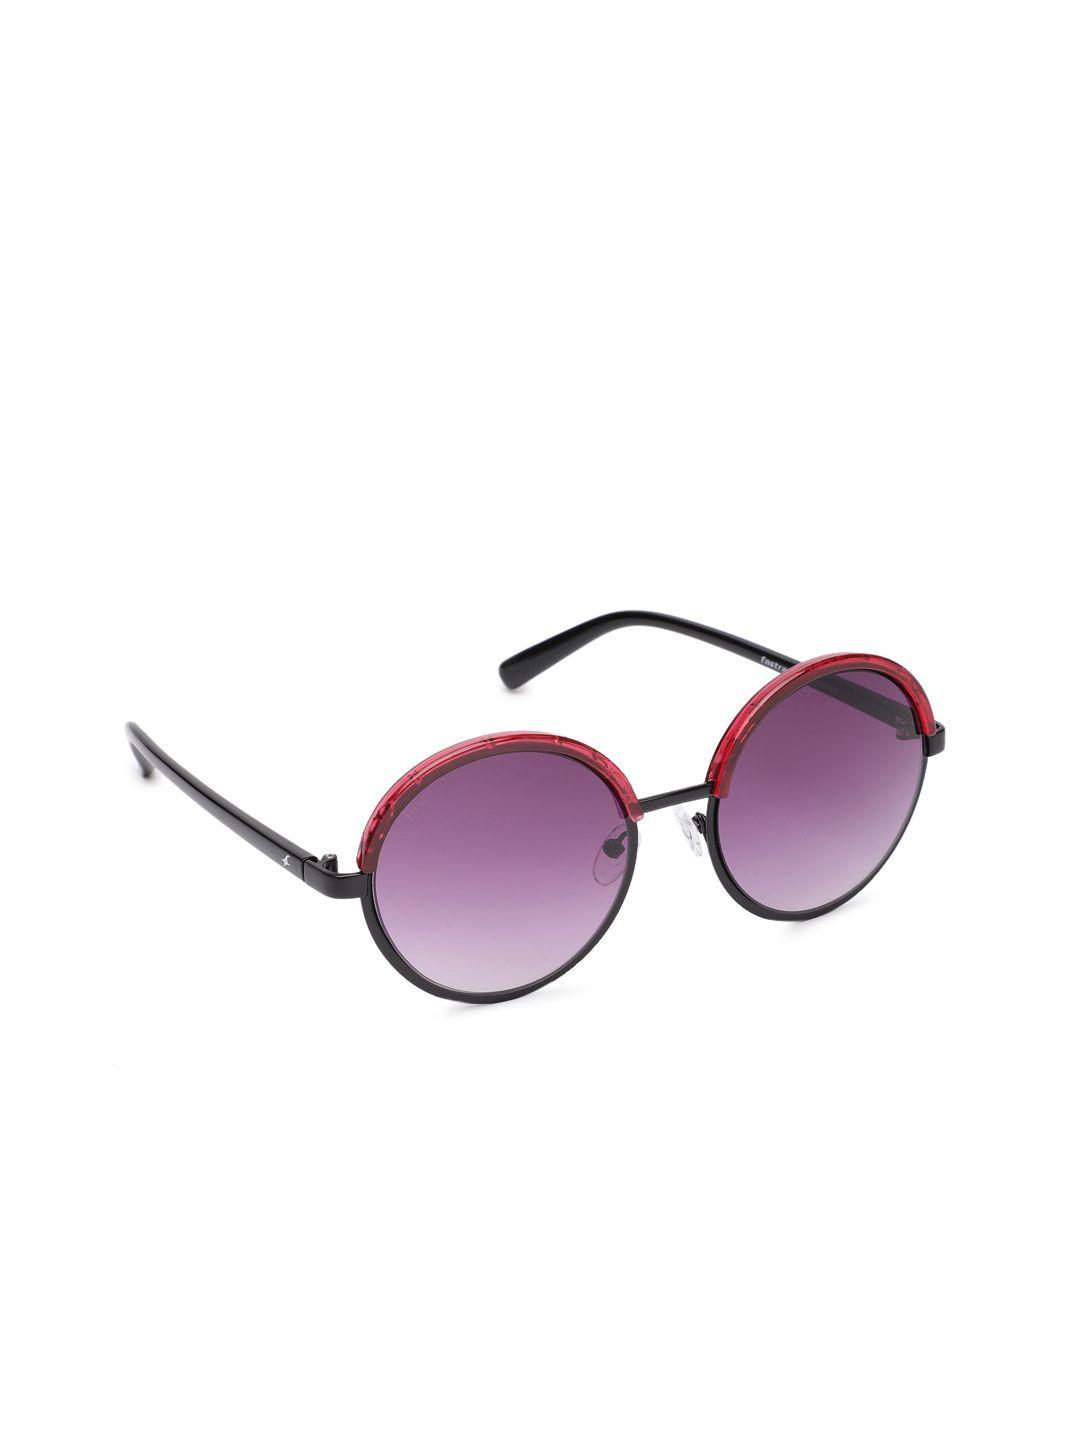 fastrack-women-round-sunglasses-c070pr2f